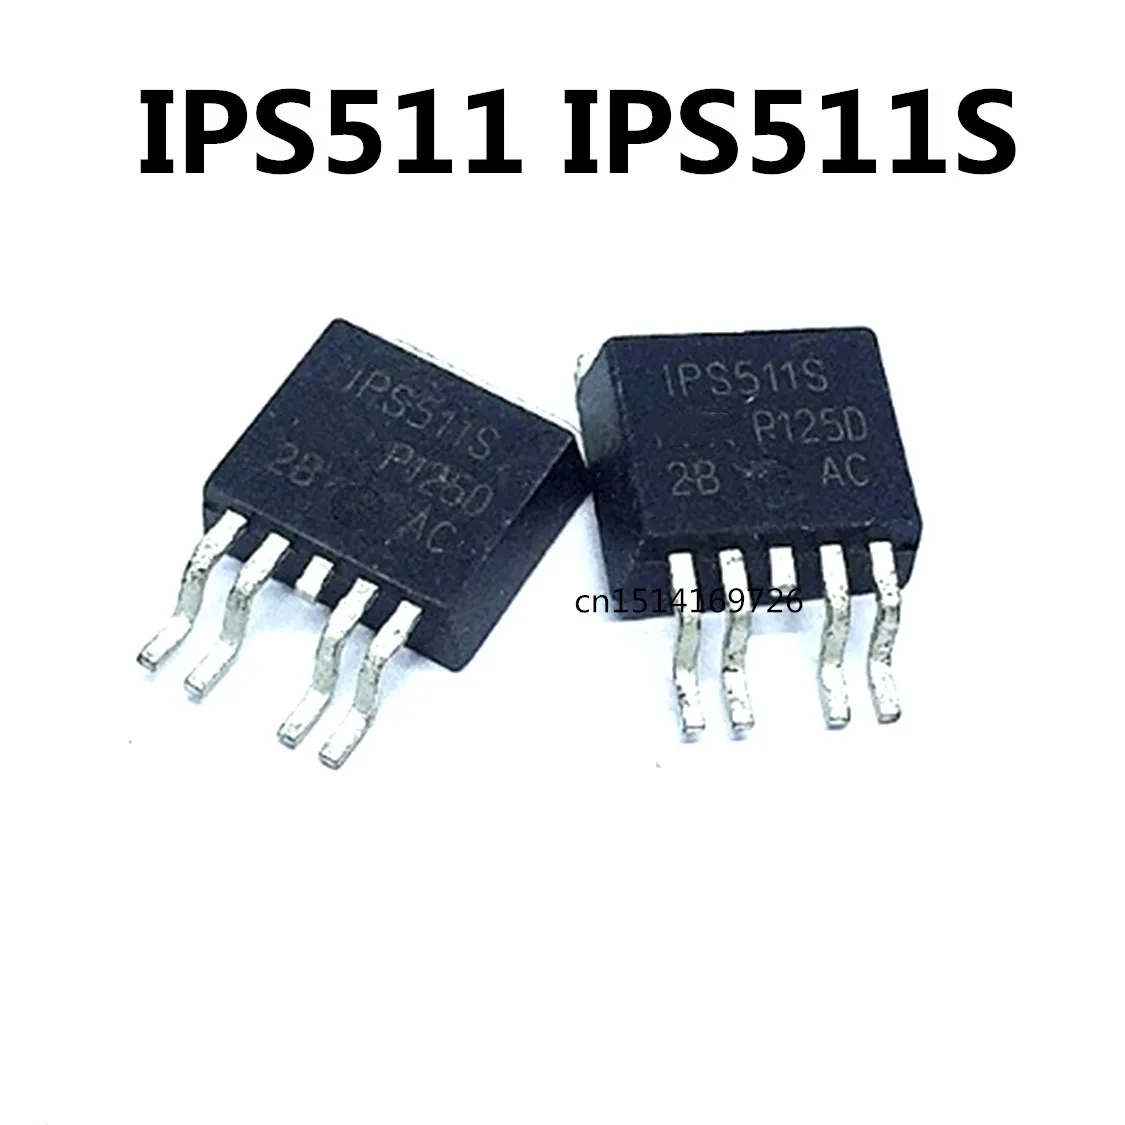 

Original new 5pcs/ IPS511 IPS511S TO-263-5